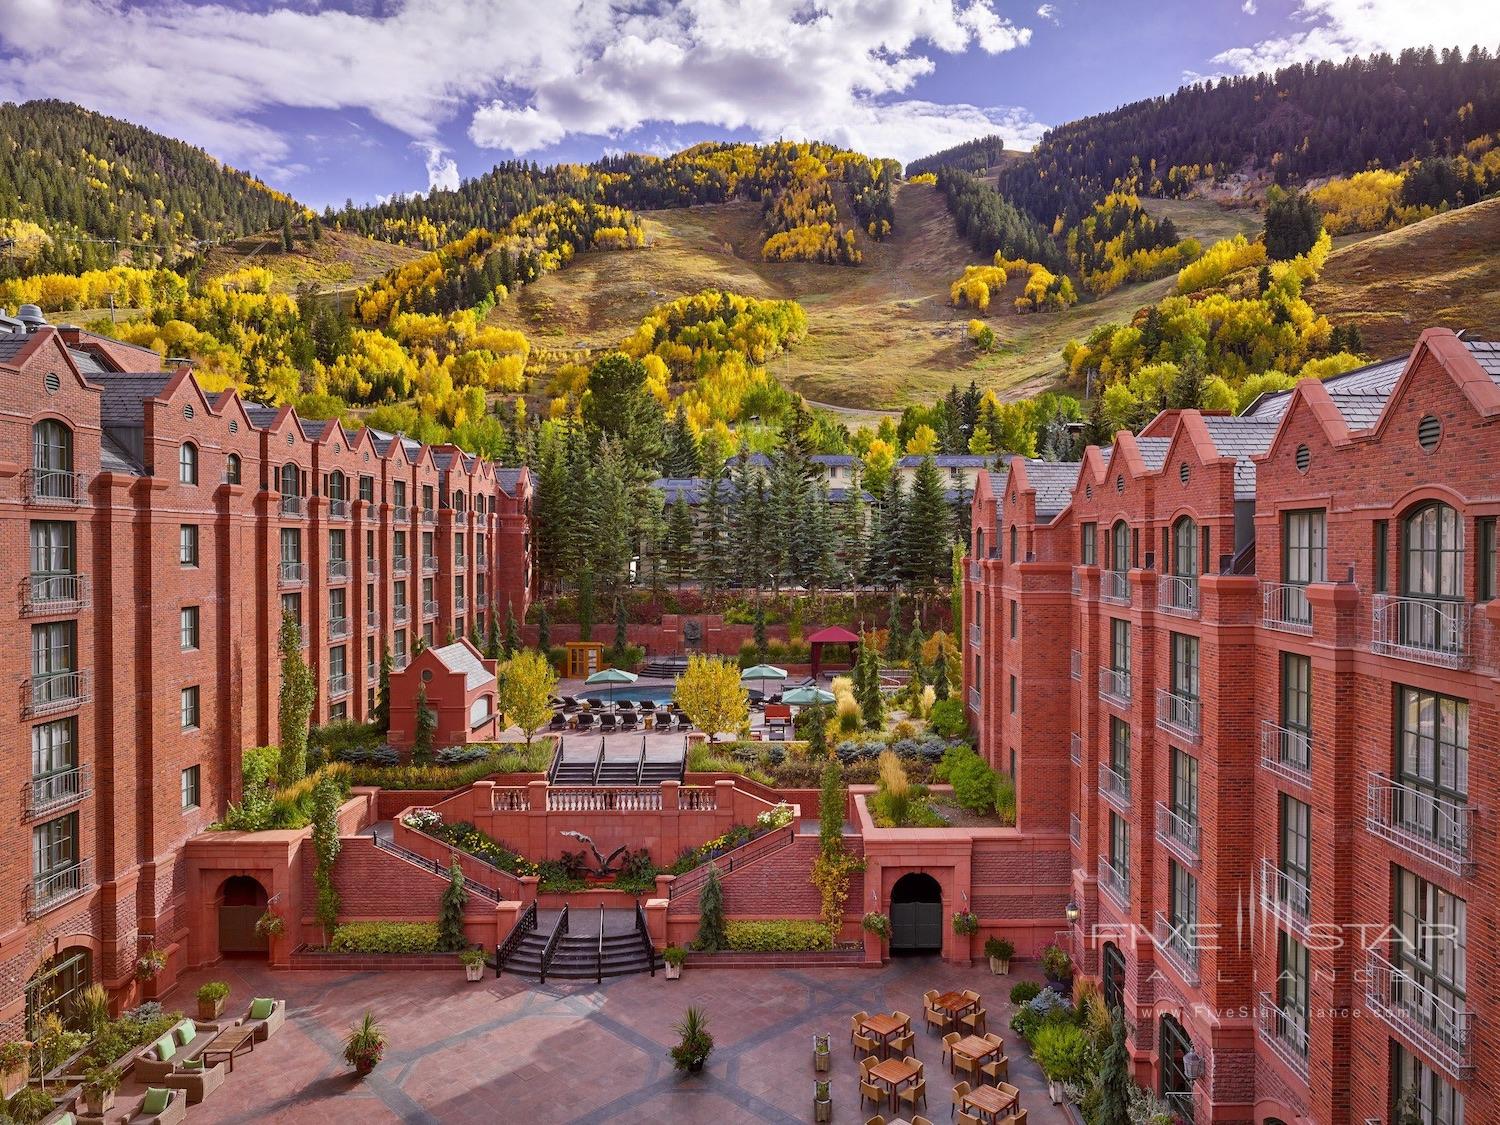 The St. Regis Resort Aspen is made of 800,000 Colorado Red Bricks